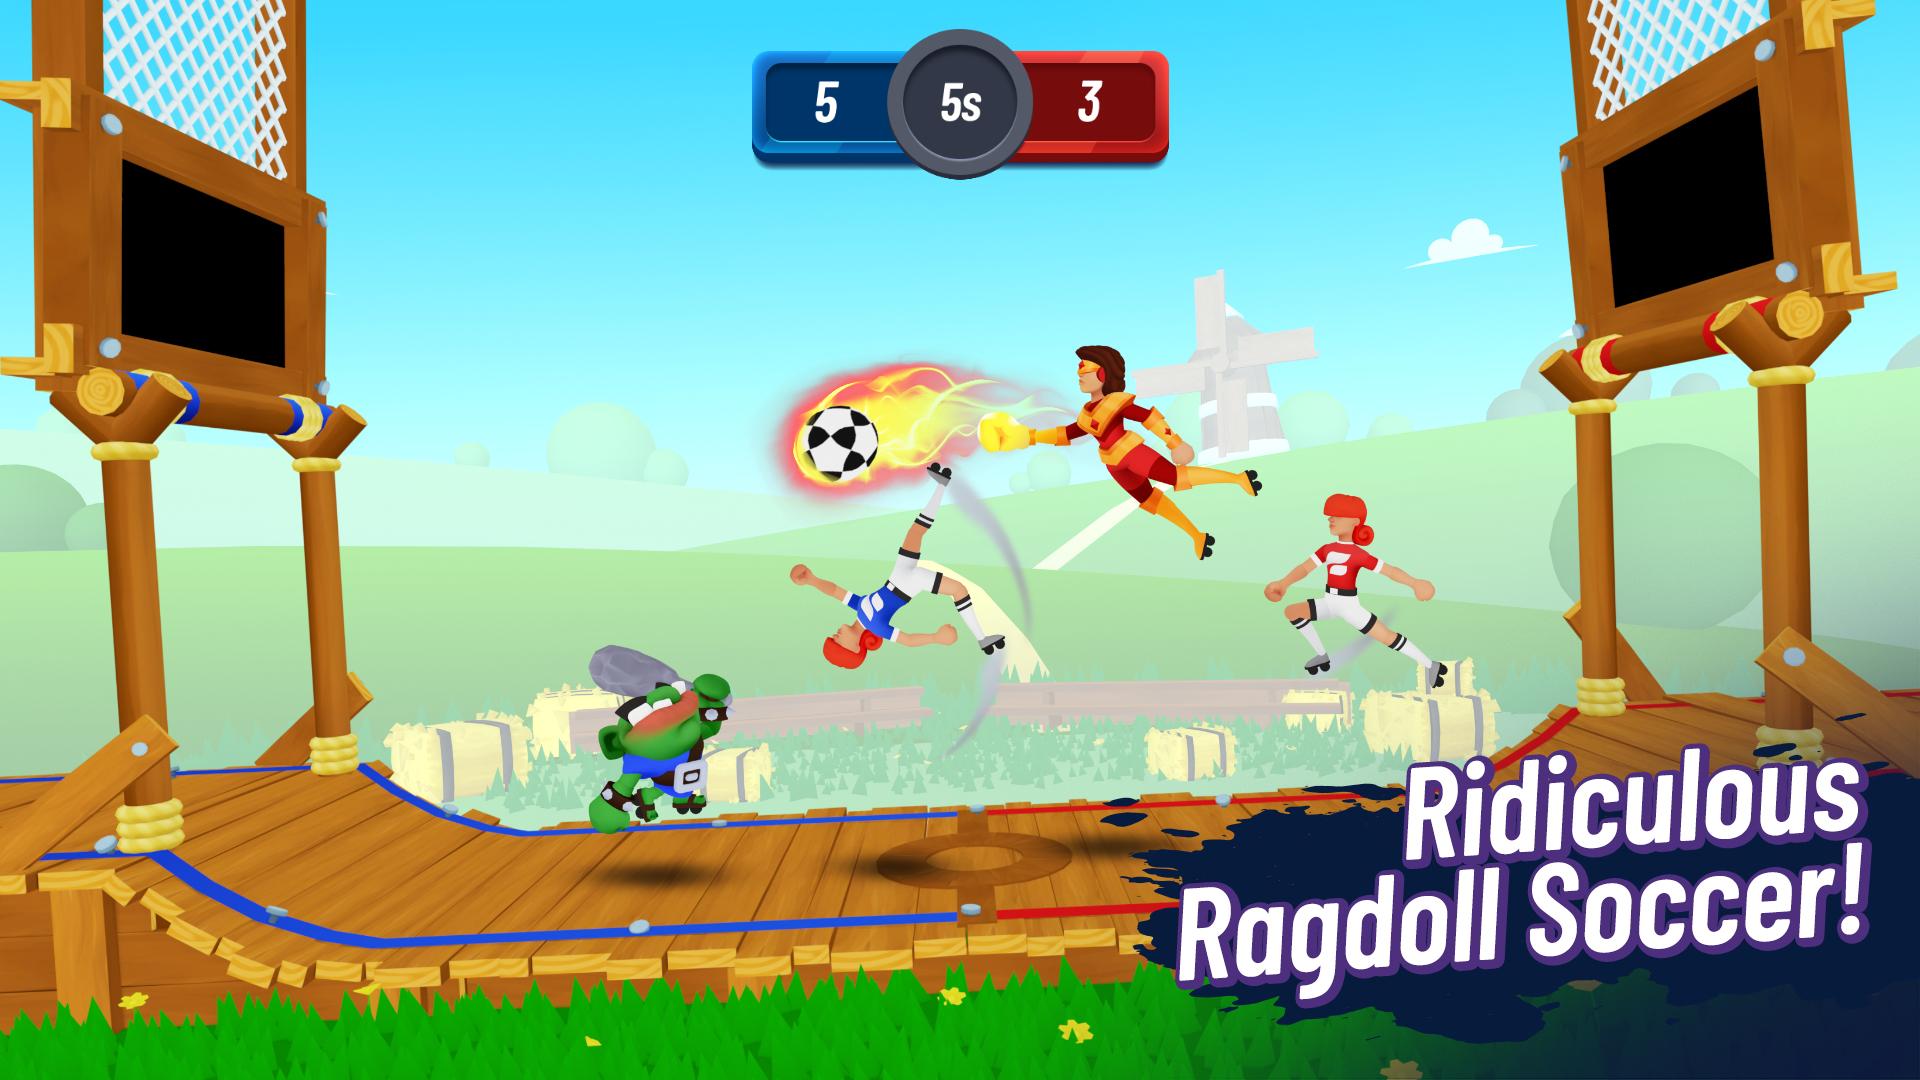 Ballmasters Ridiculous Ragdoll Soccer 0.6.0 Screenshot 13